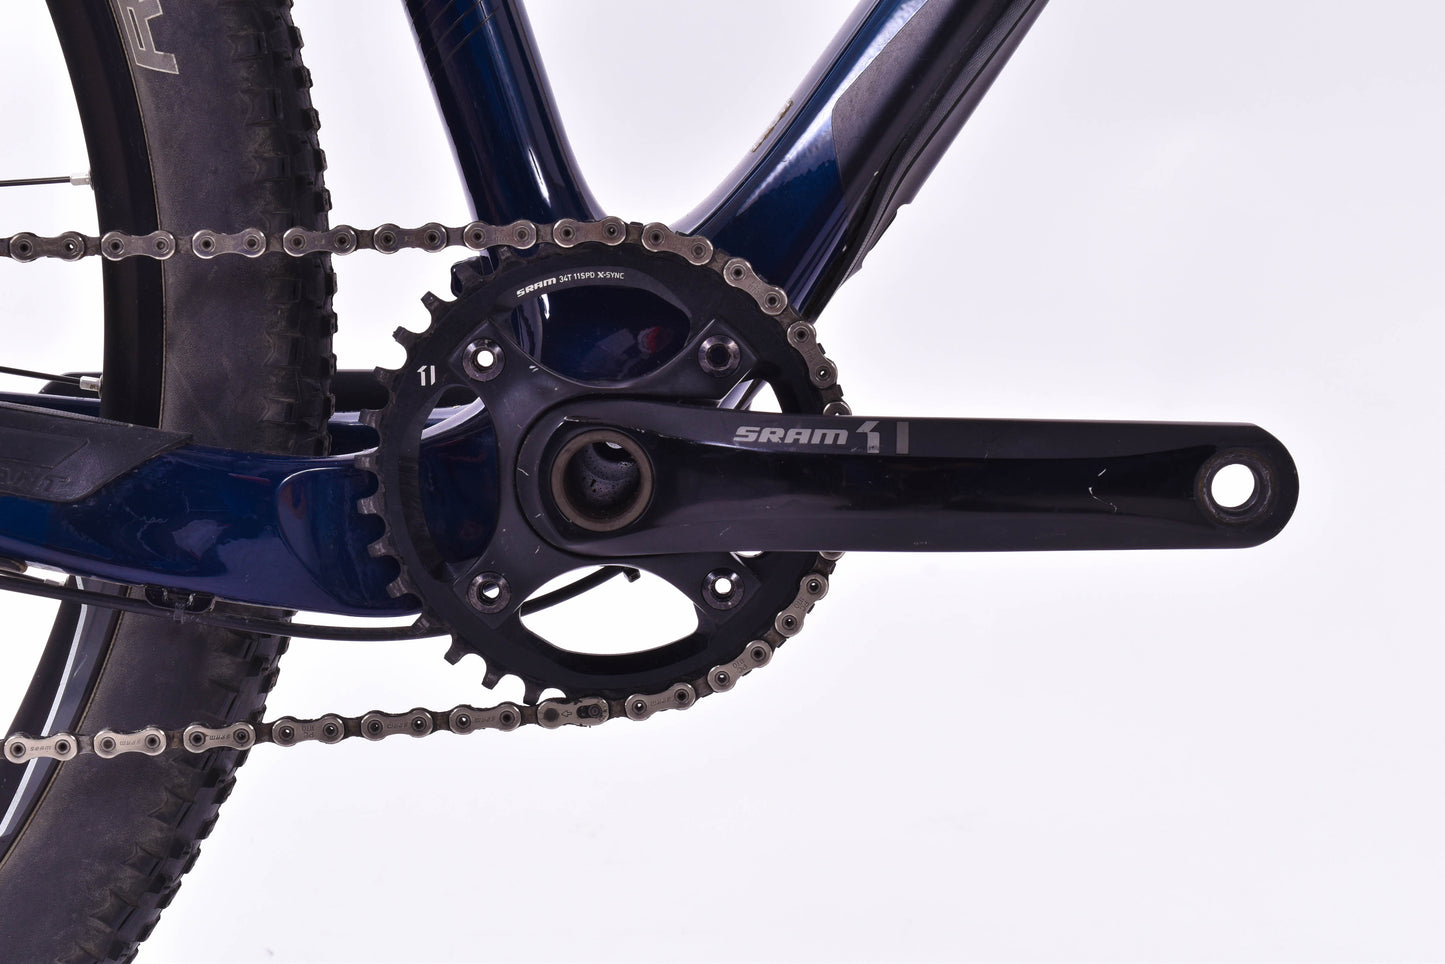 USED 2014 Giant XTC Advanced 27.5 Medium Carbon Hardtail Mountain Bike